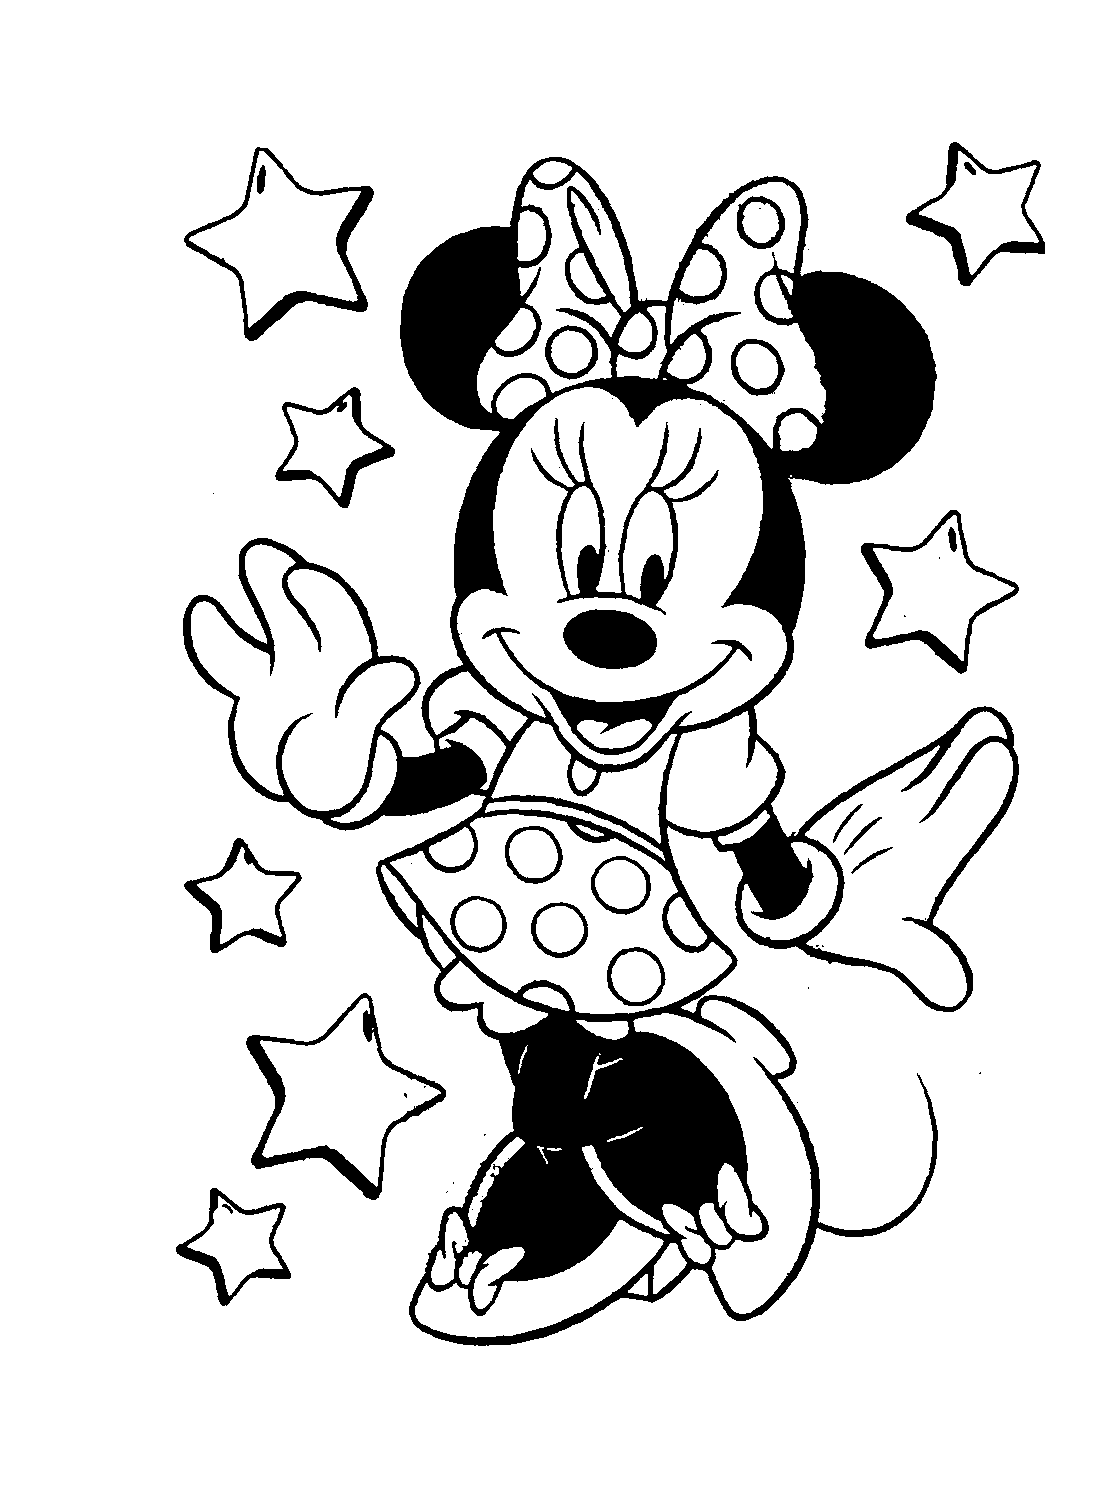 Stars around the star Minnie Mouse!